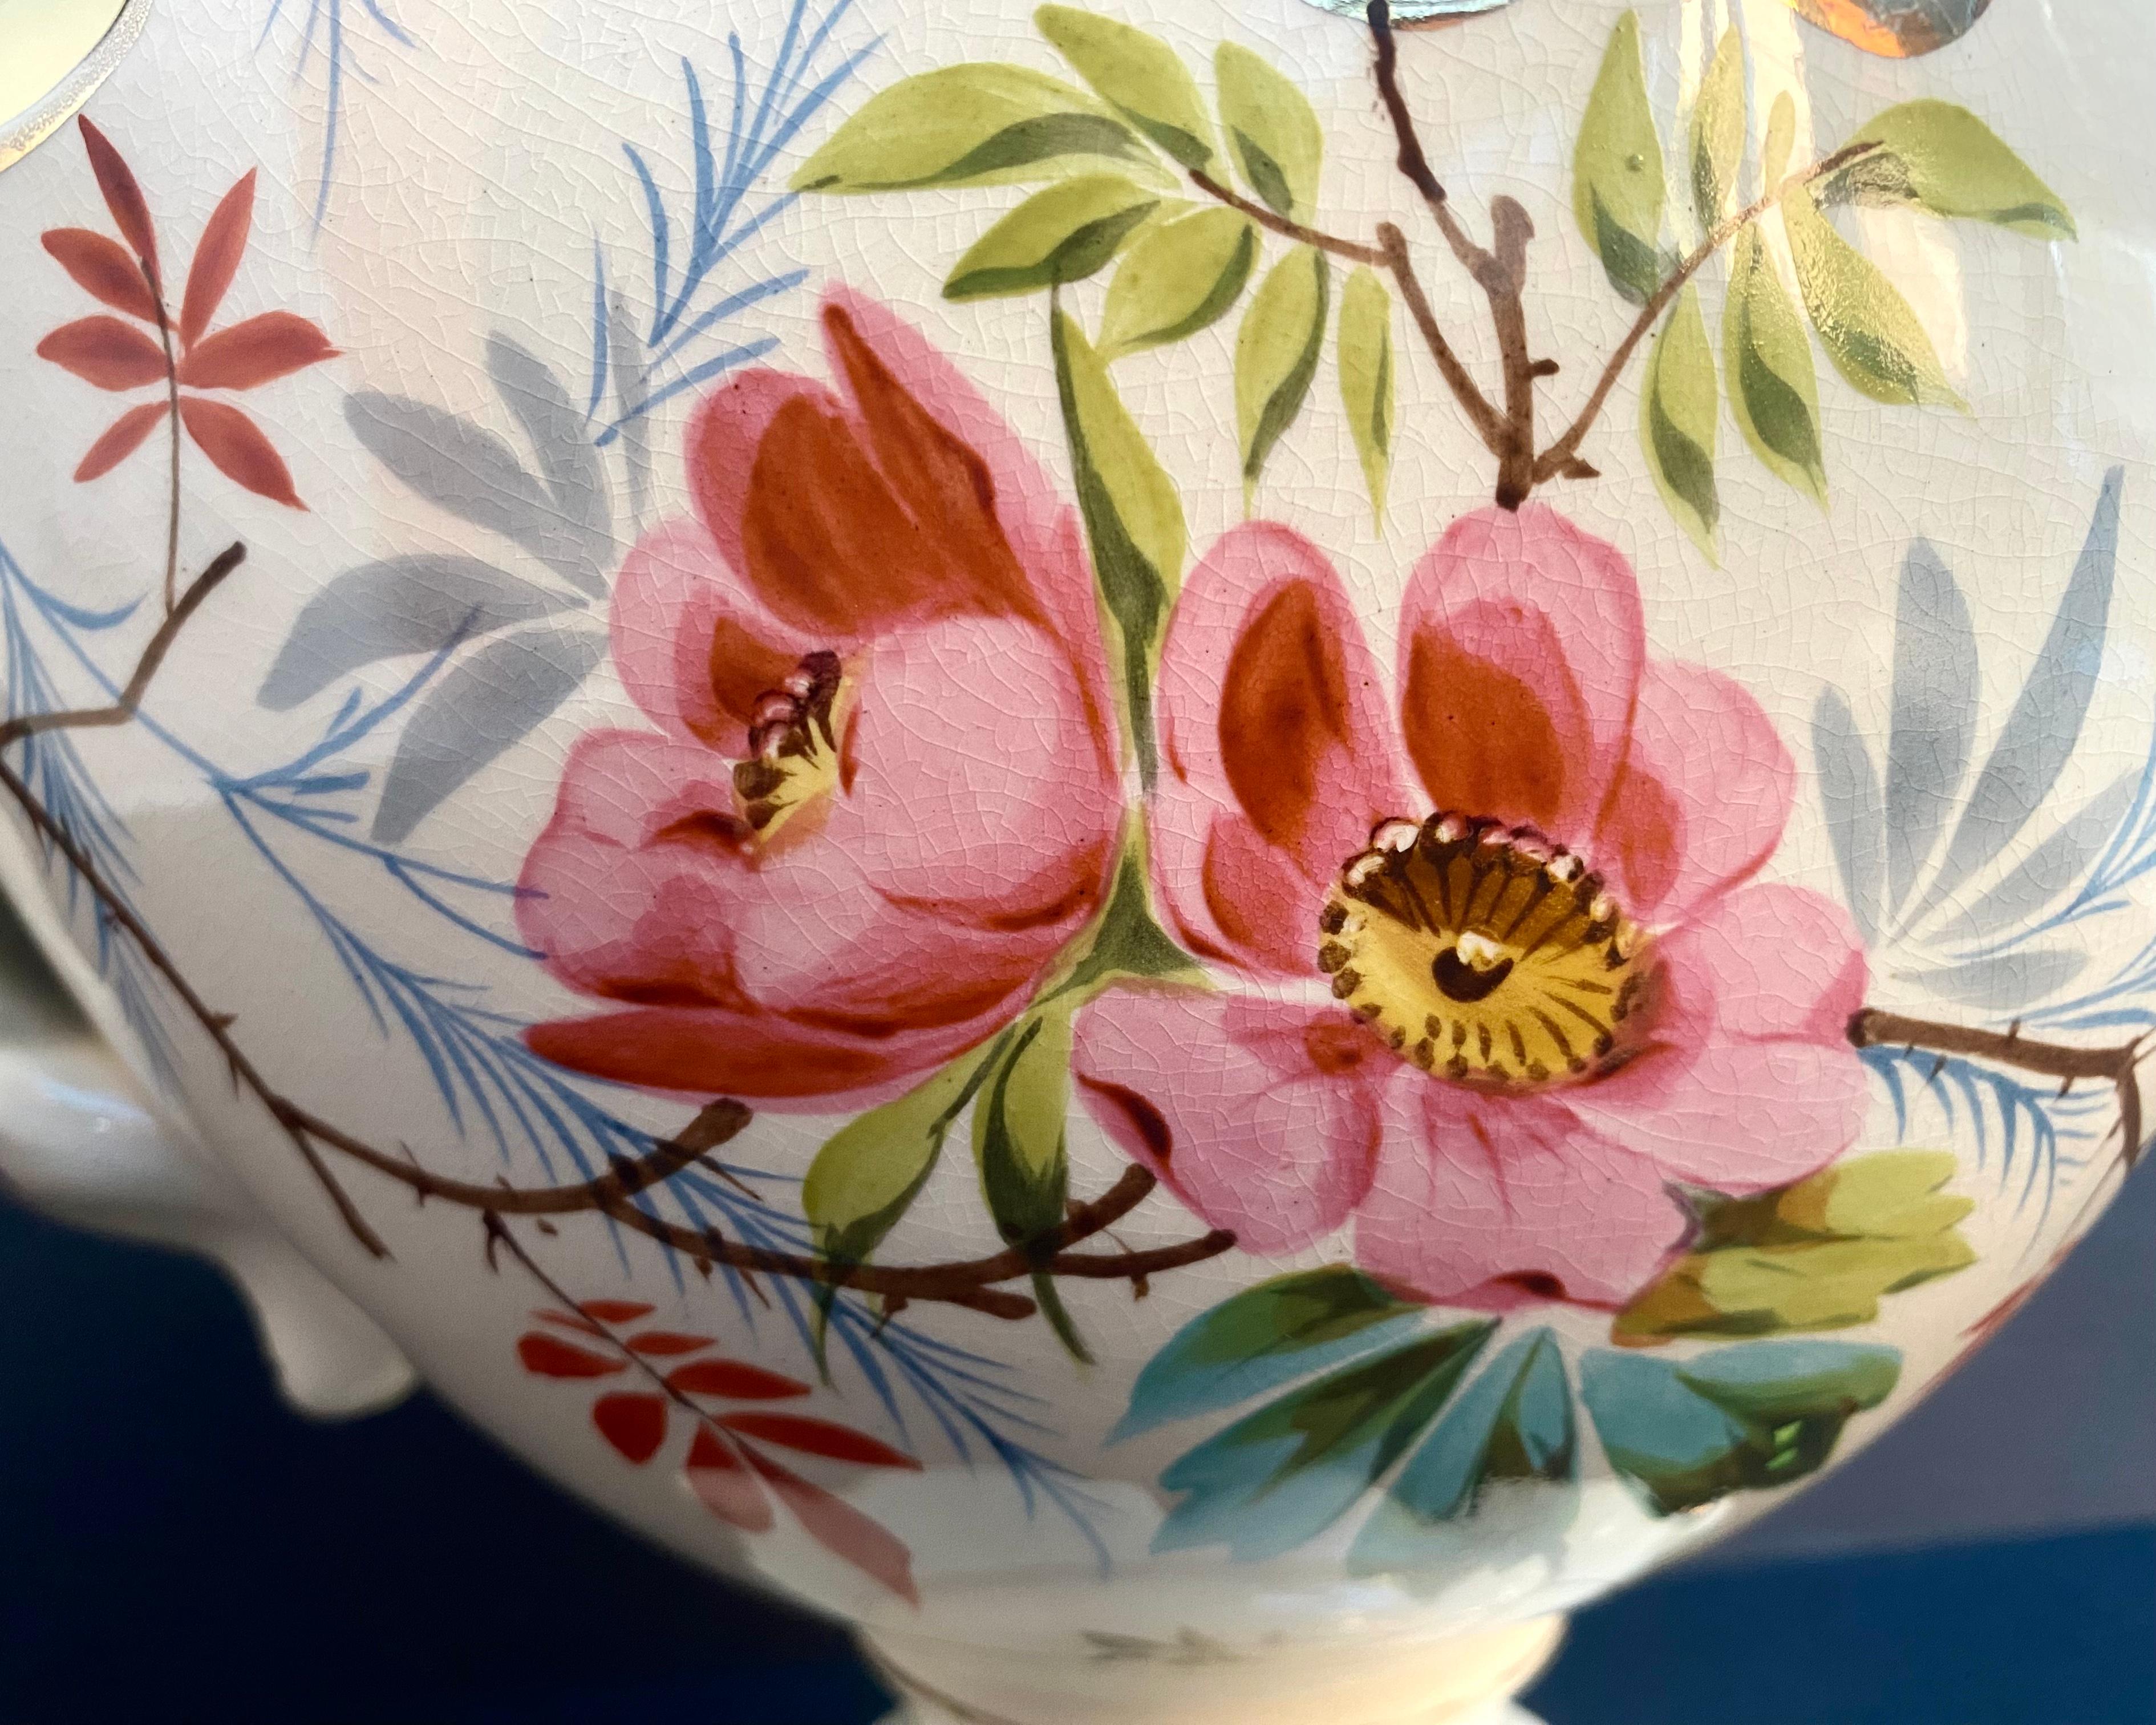 Mid-20th Century French Vintage Ceramic Planter, 1950 Floral Pattern Porcelain Vase For Sale